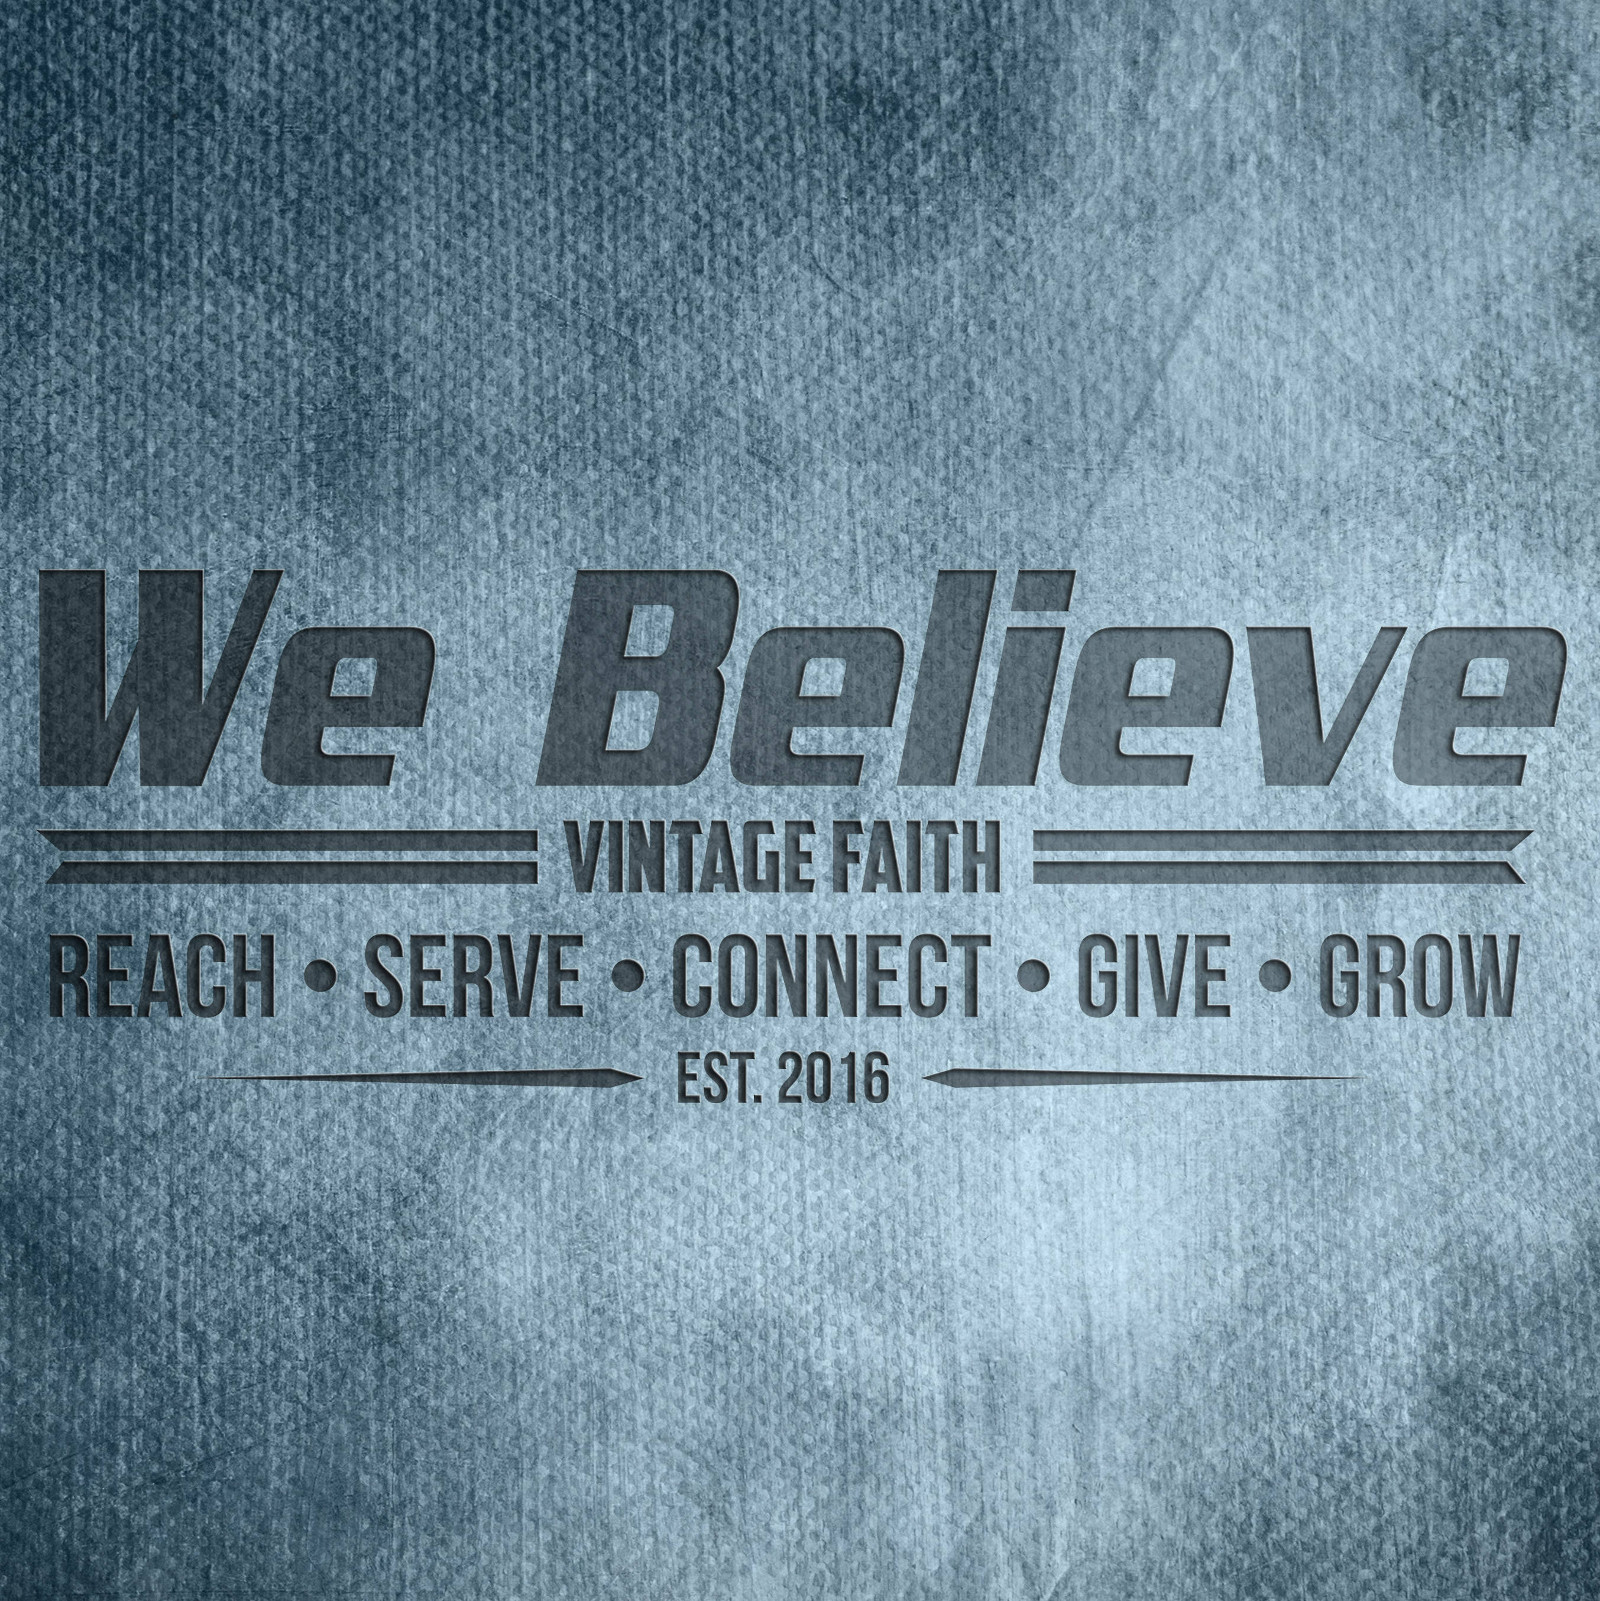 We Believe: Changing People Grow